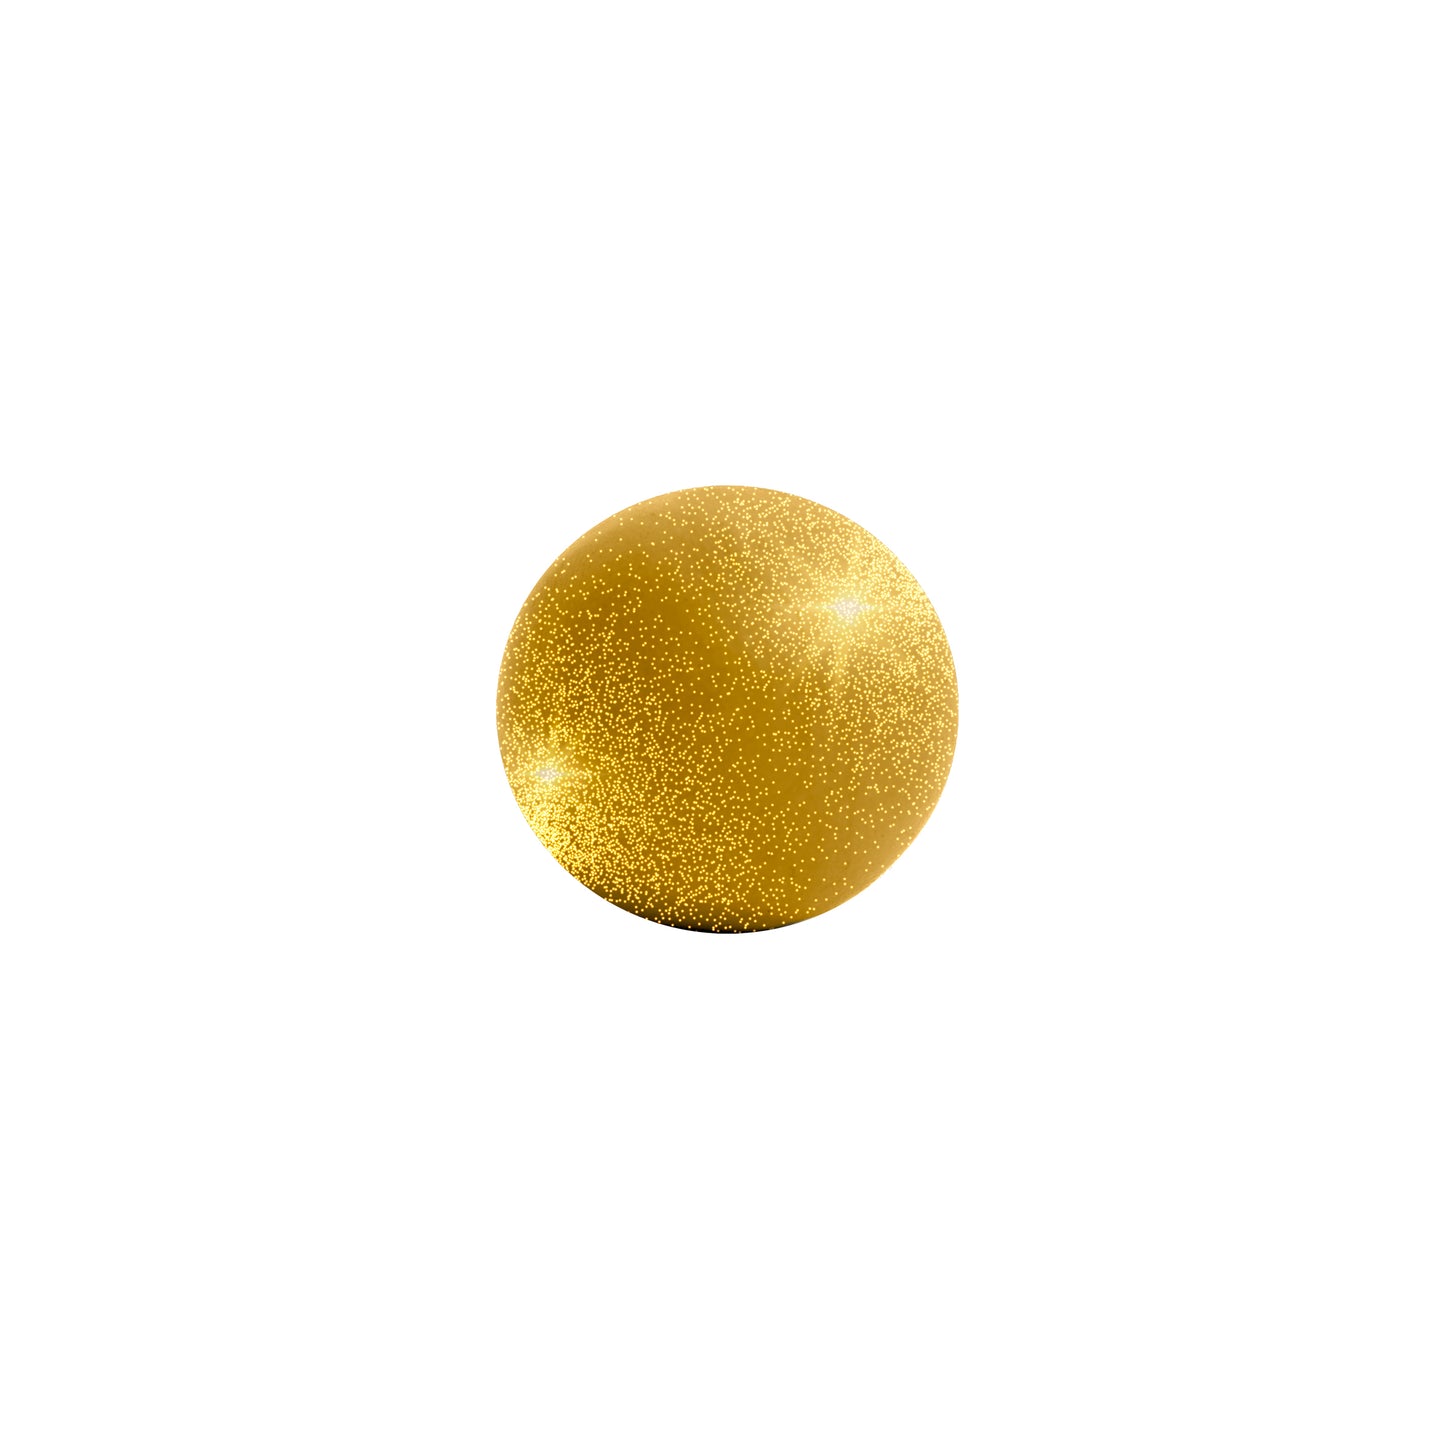 Satin Ice Vanilla Gold Shimmer Fondant - 2 lb. Pail - Satin Ice